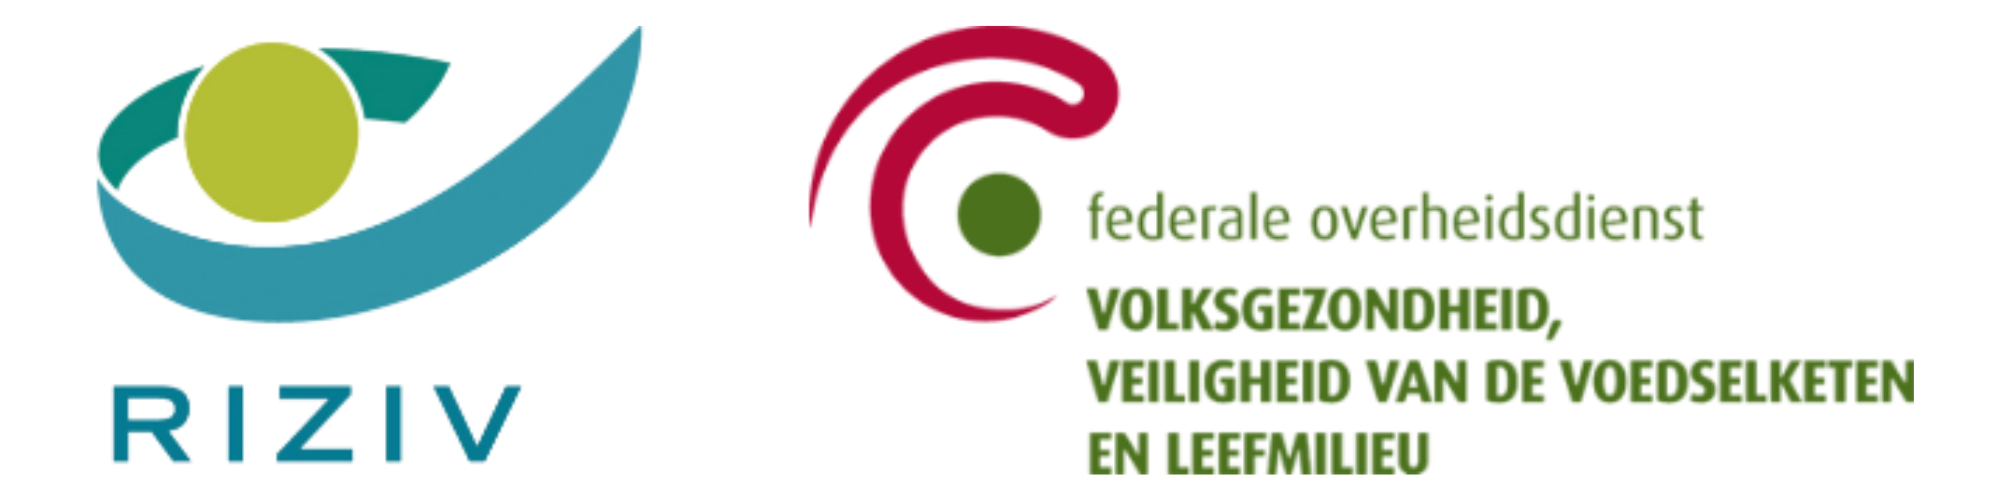 FOD_logo_nl